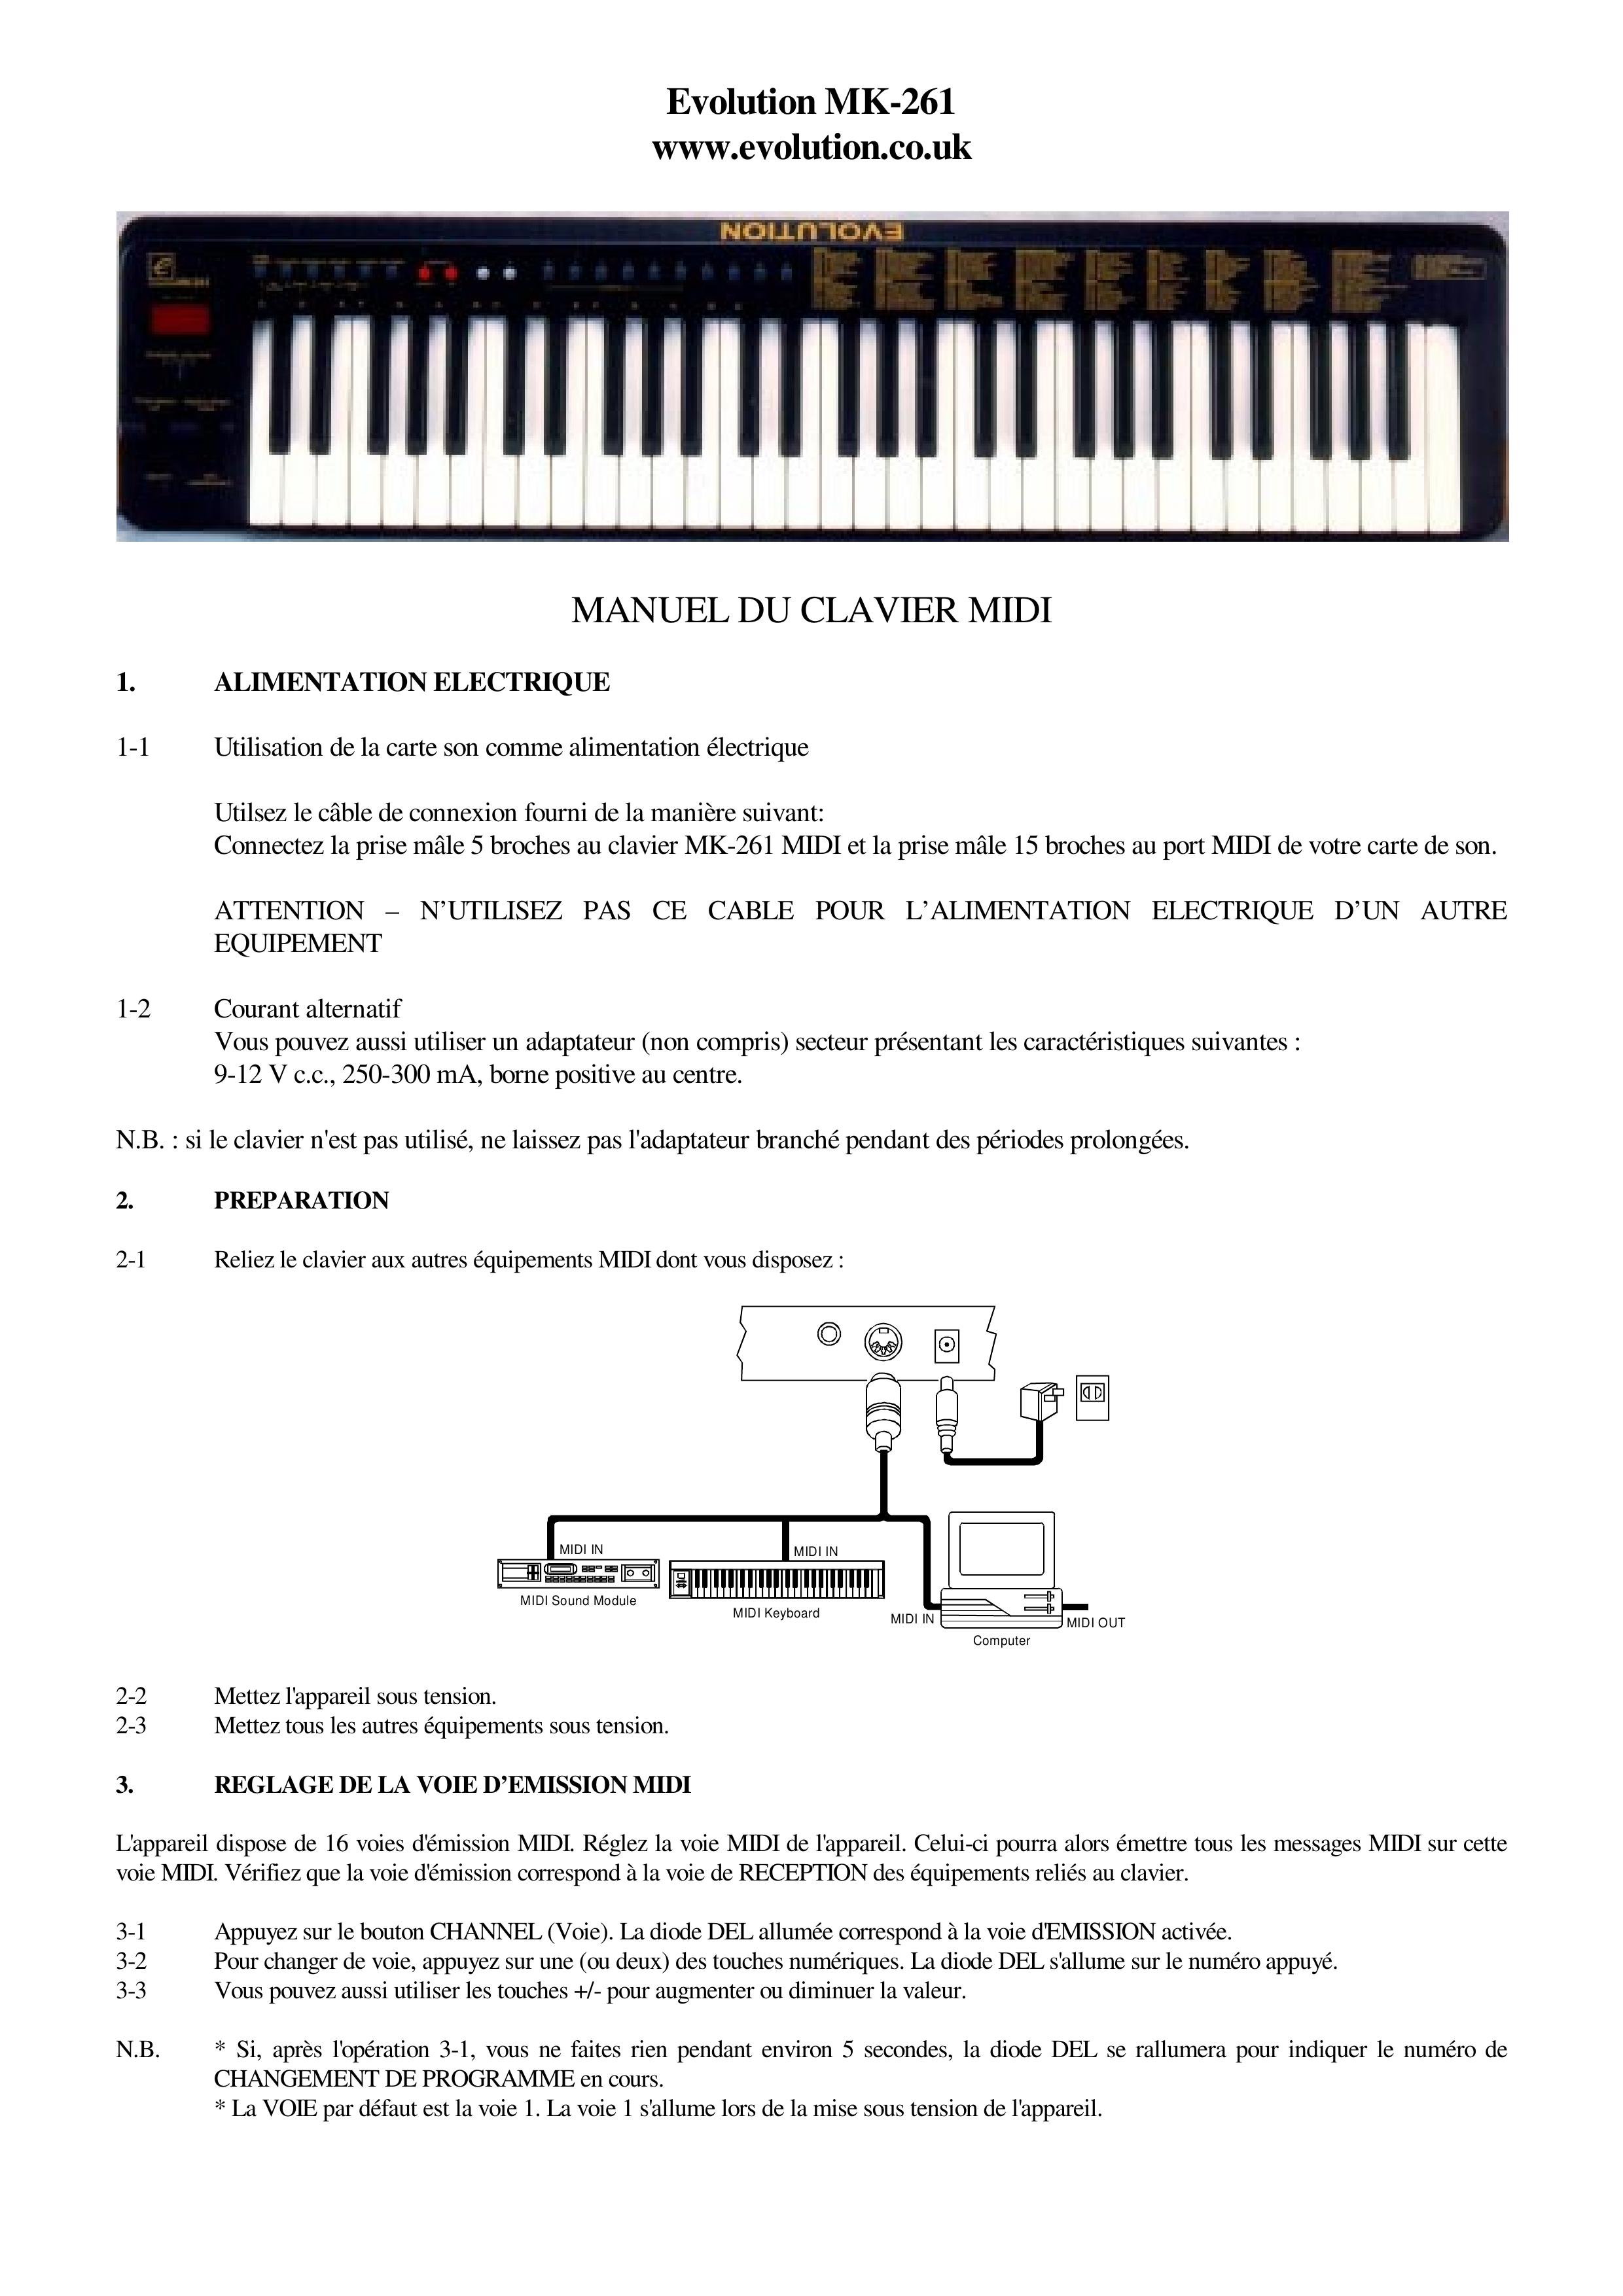 Evolution Technologies ME 104 Electronic Keyboard User Manual